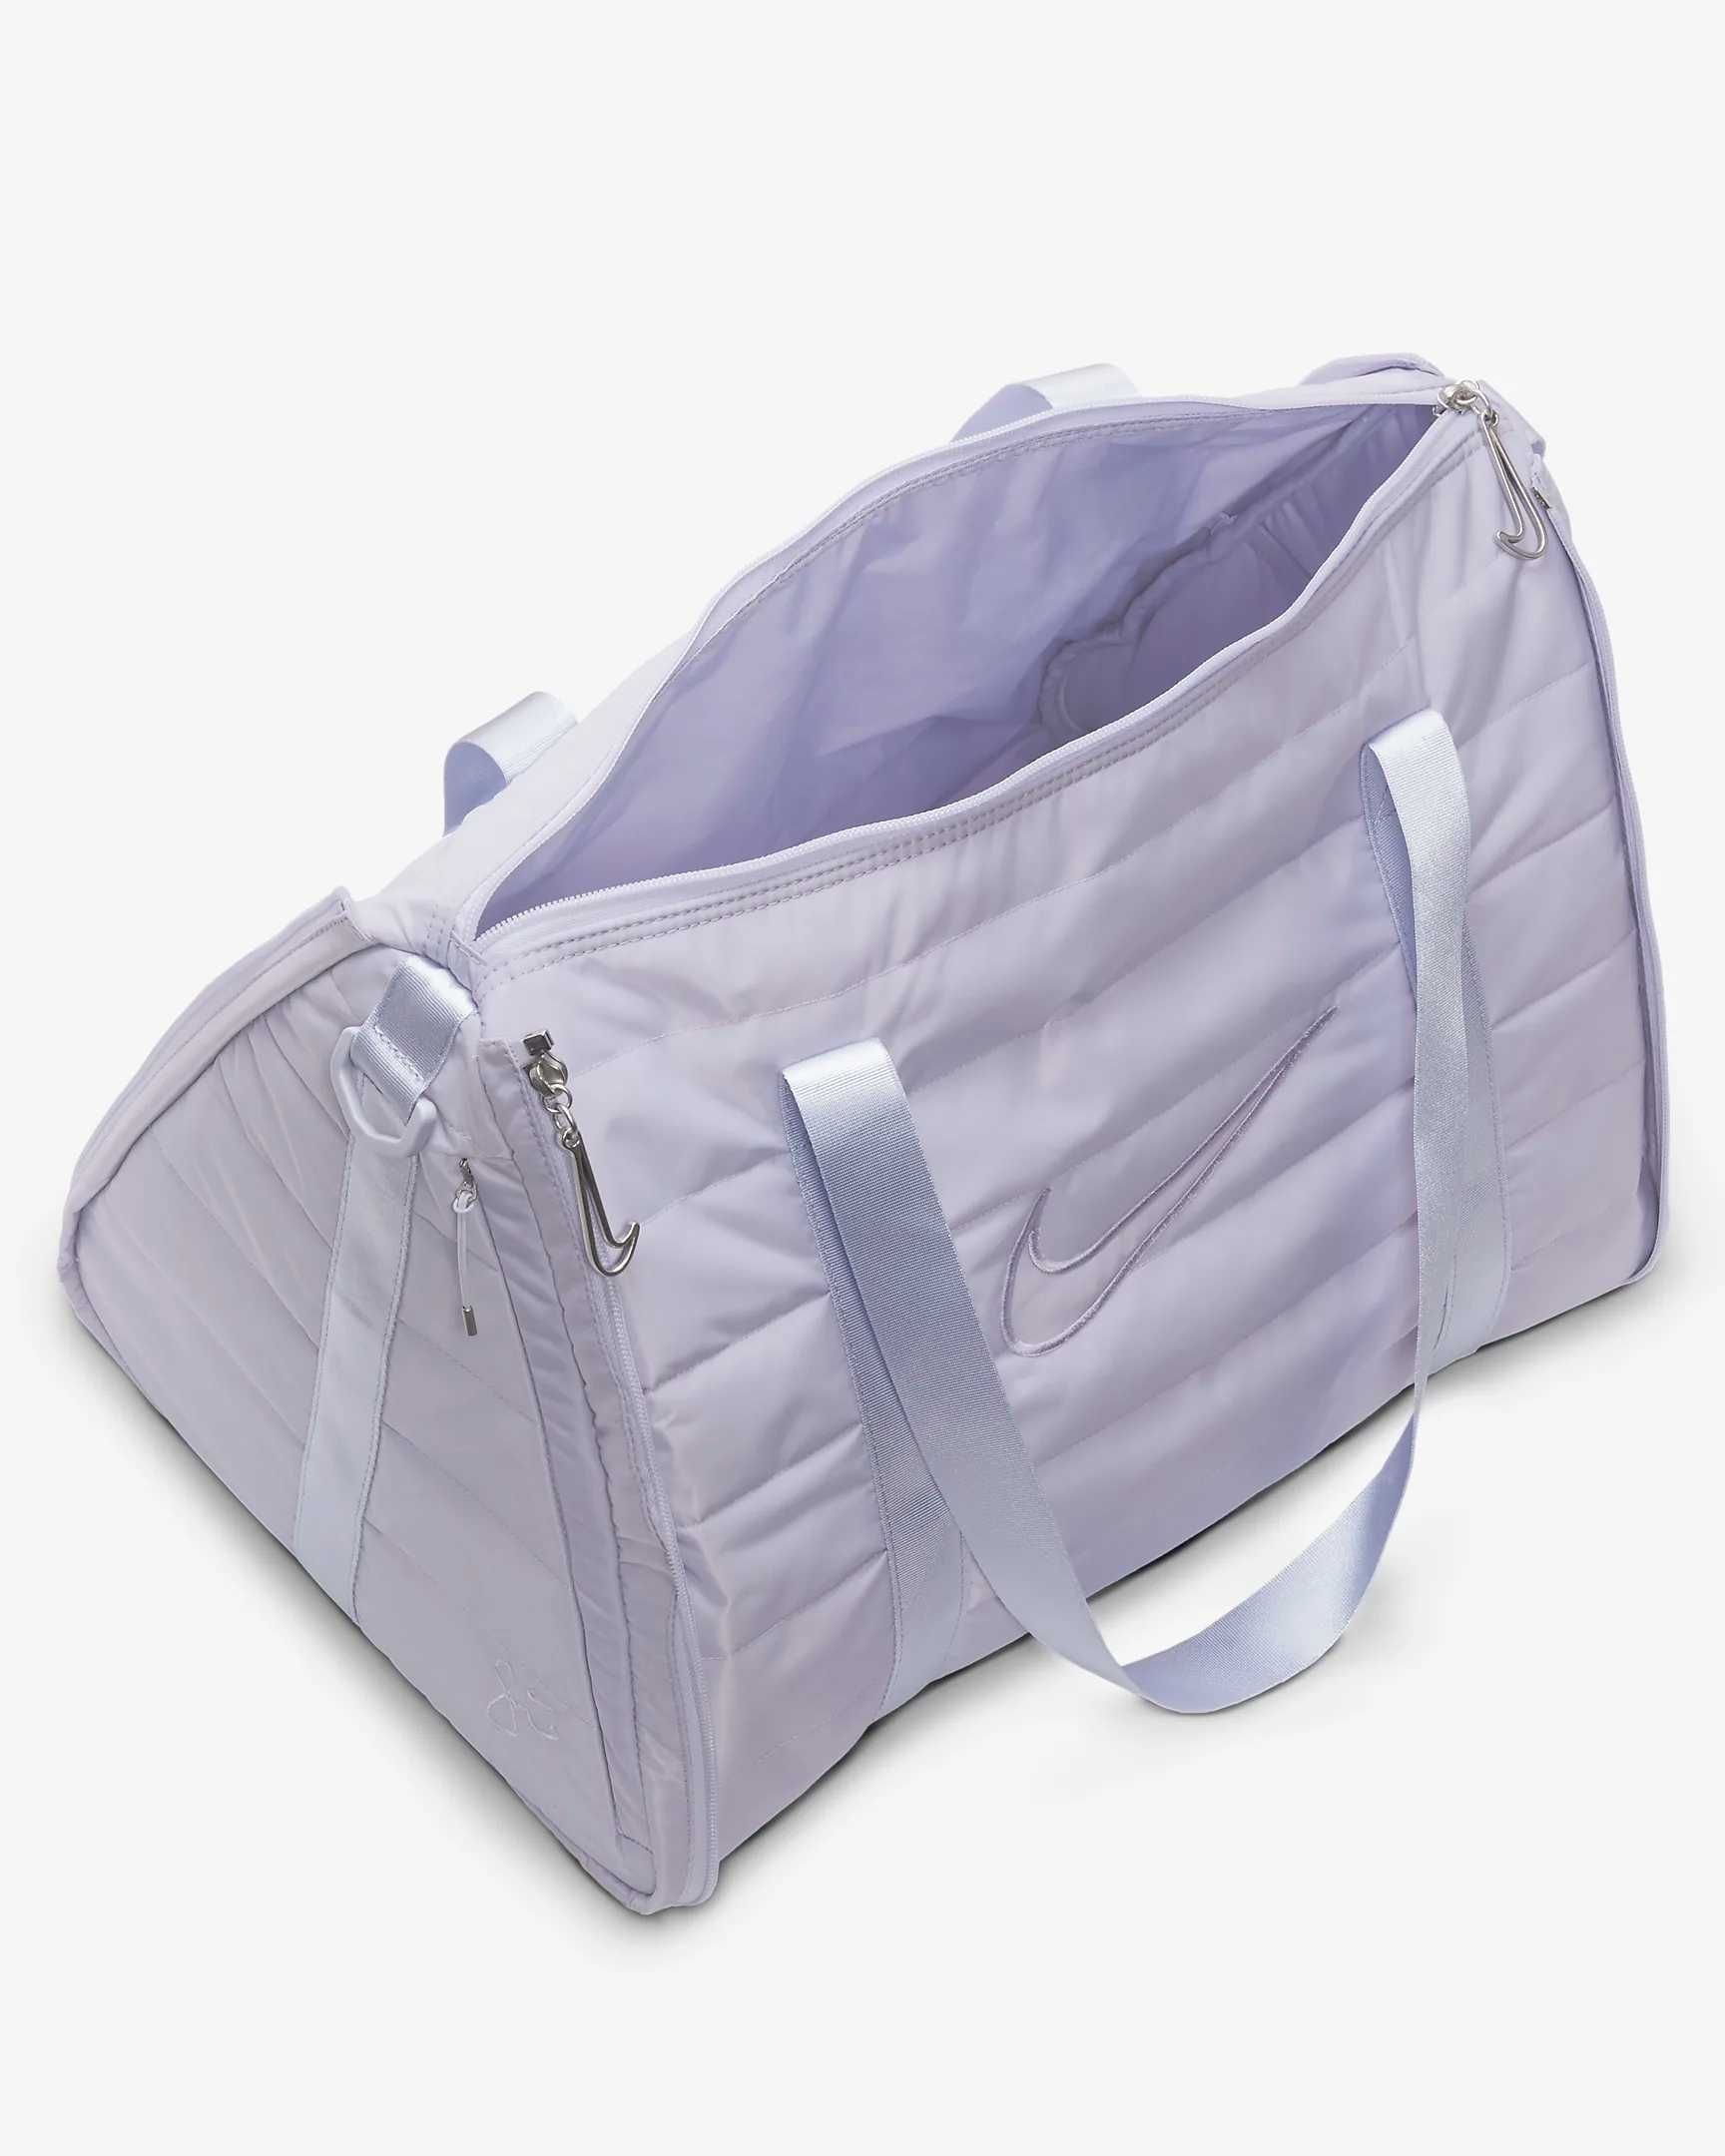 Serena Williams Design Crew
Duffel Bag (35L)